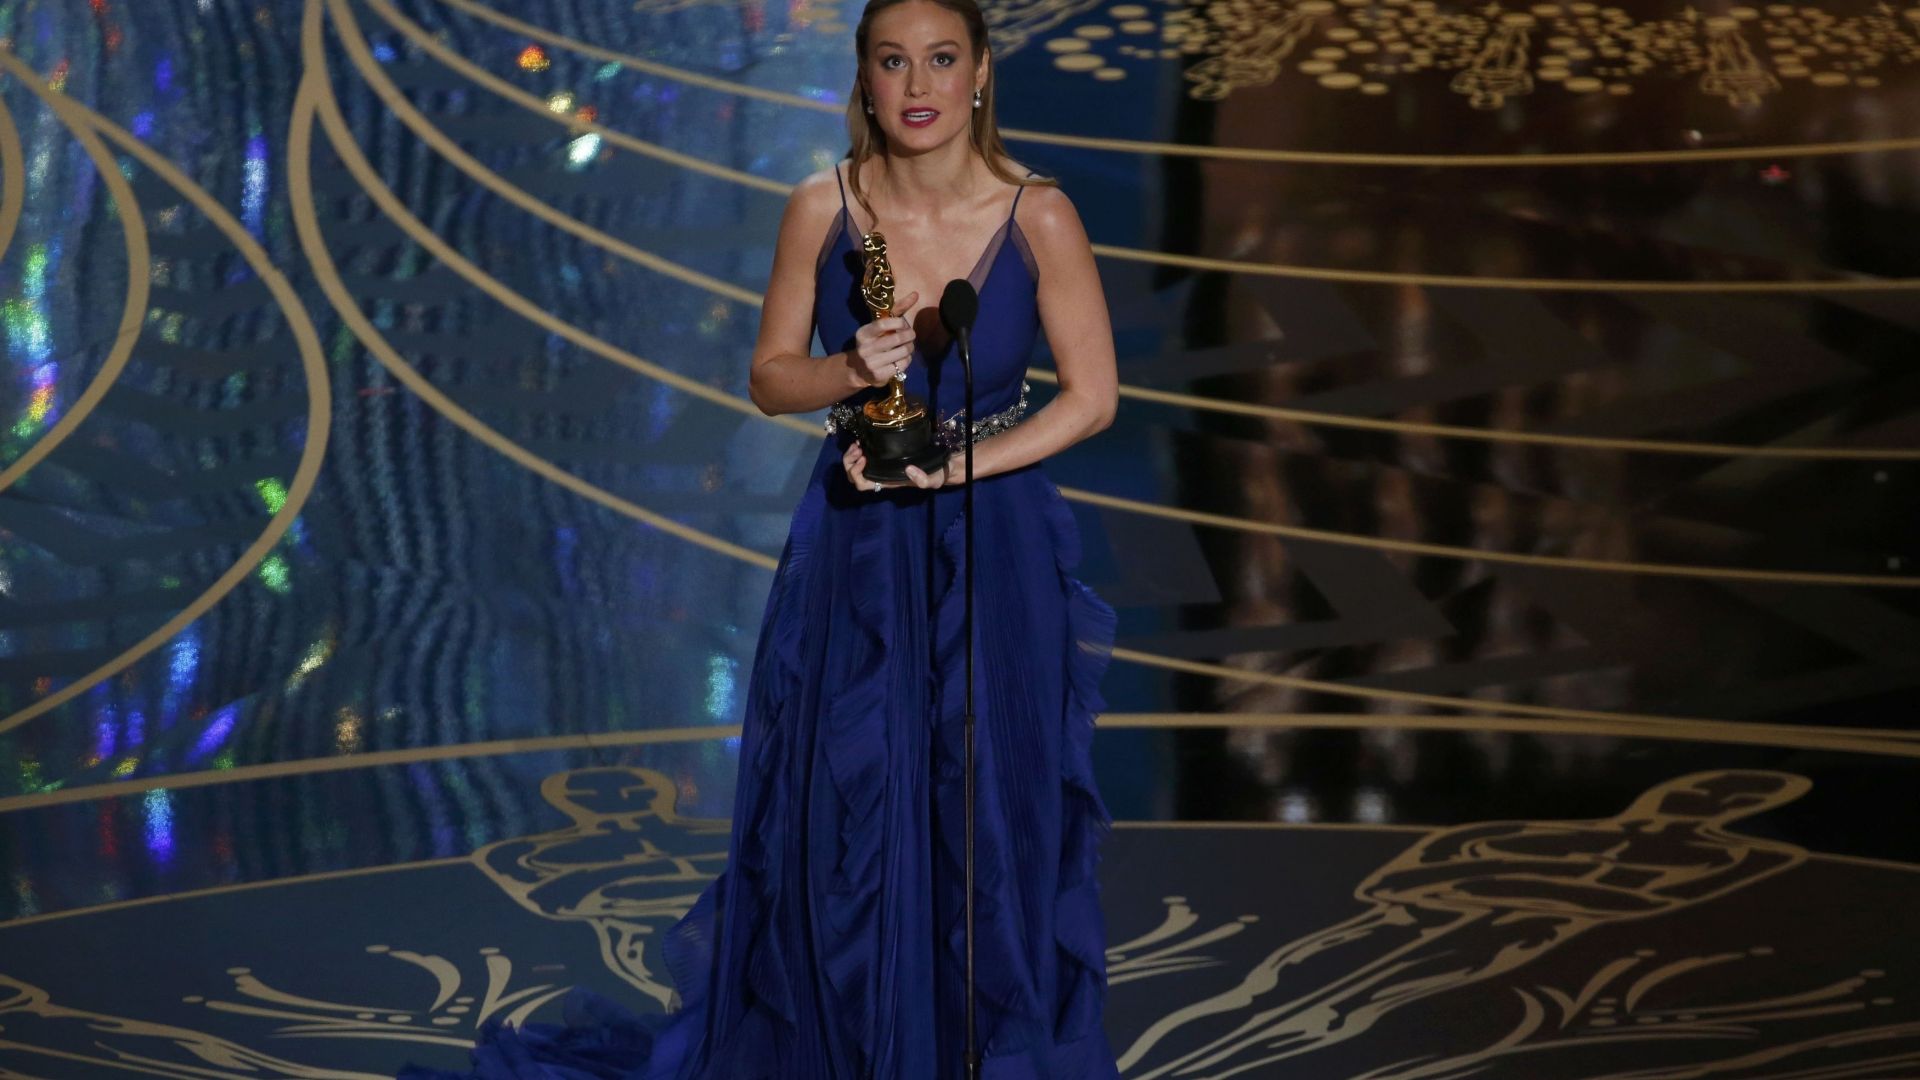 Brie Larson, Oscar 2016, red carpet, Most popular celebs, actress (horizontal)